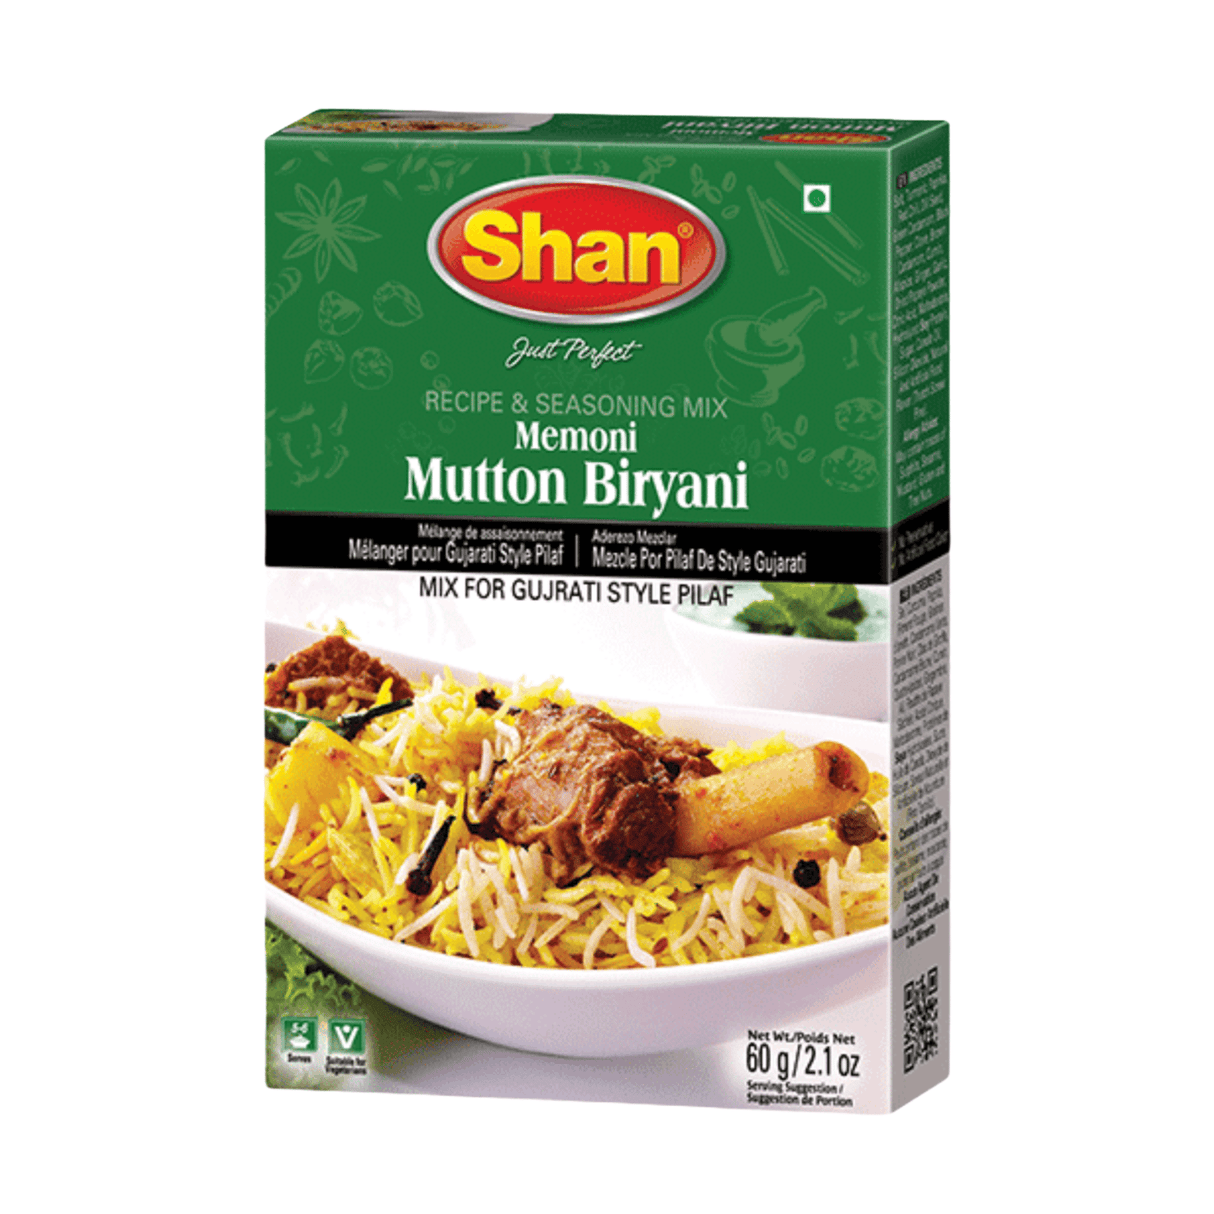 Shan Memoni Mutton Biryani